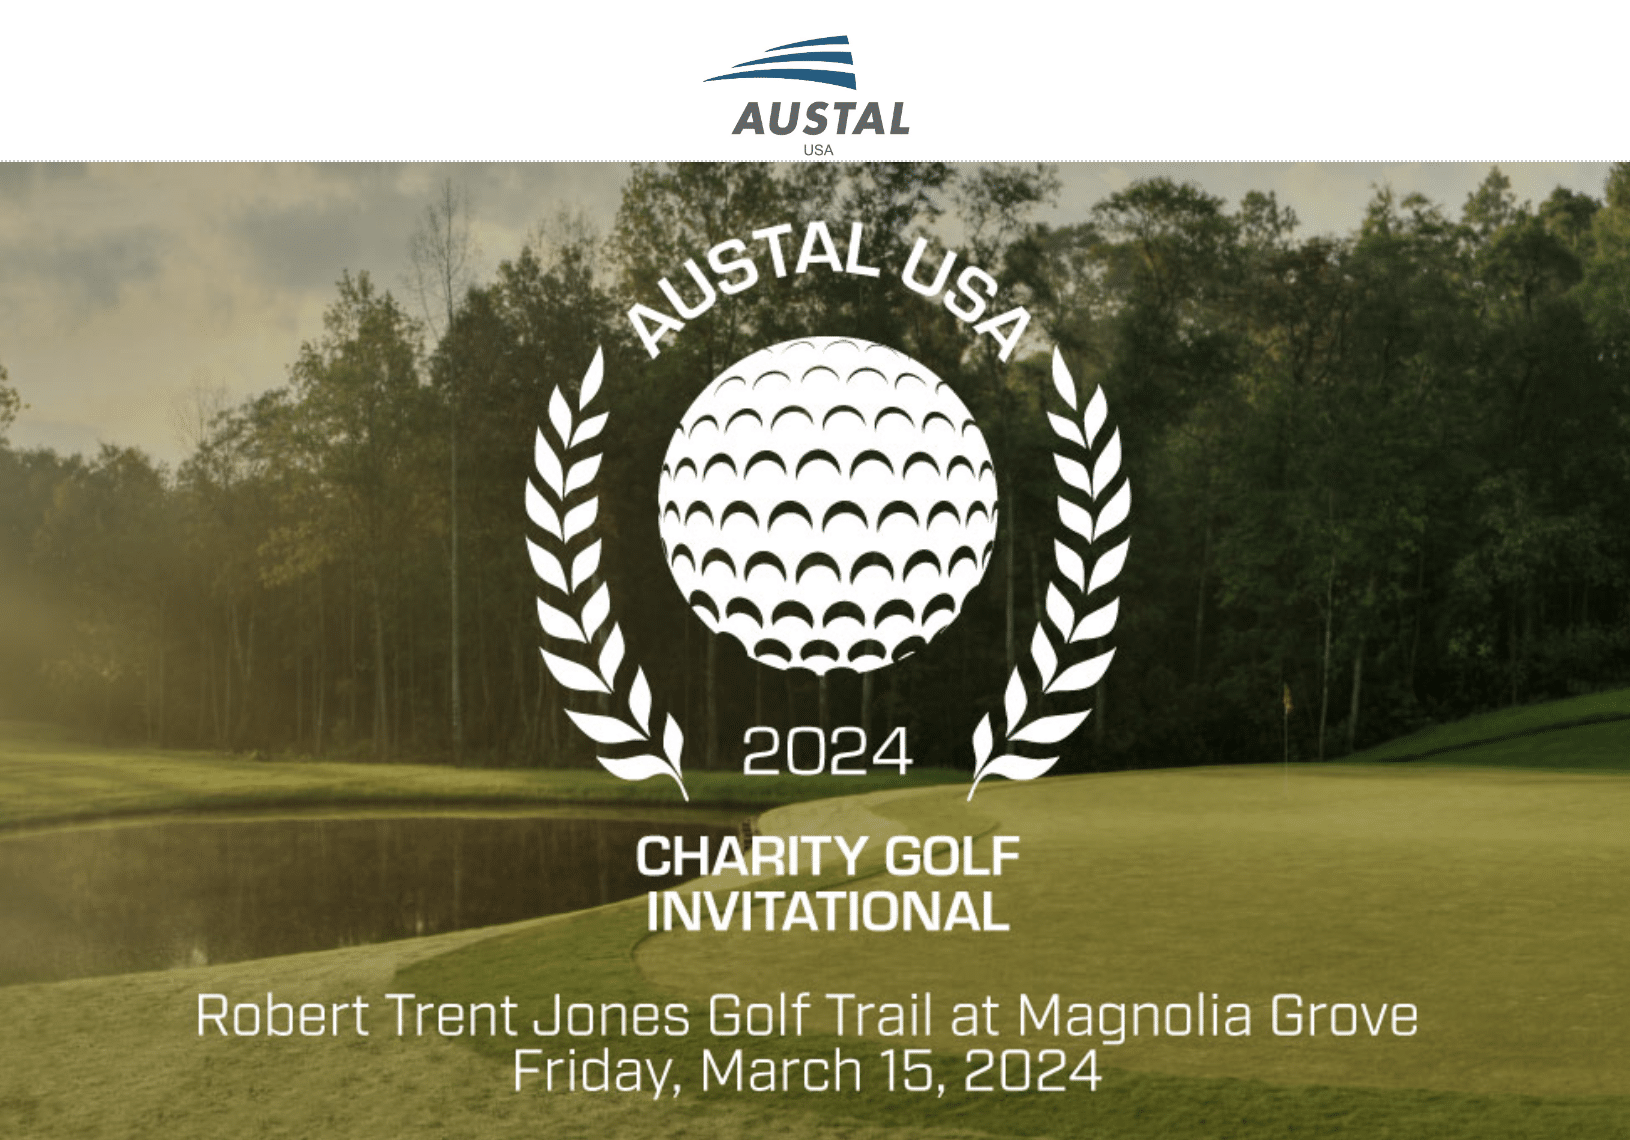 Austals Charity Golf Invitational Announced